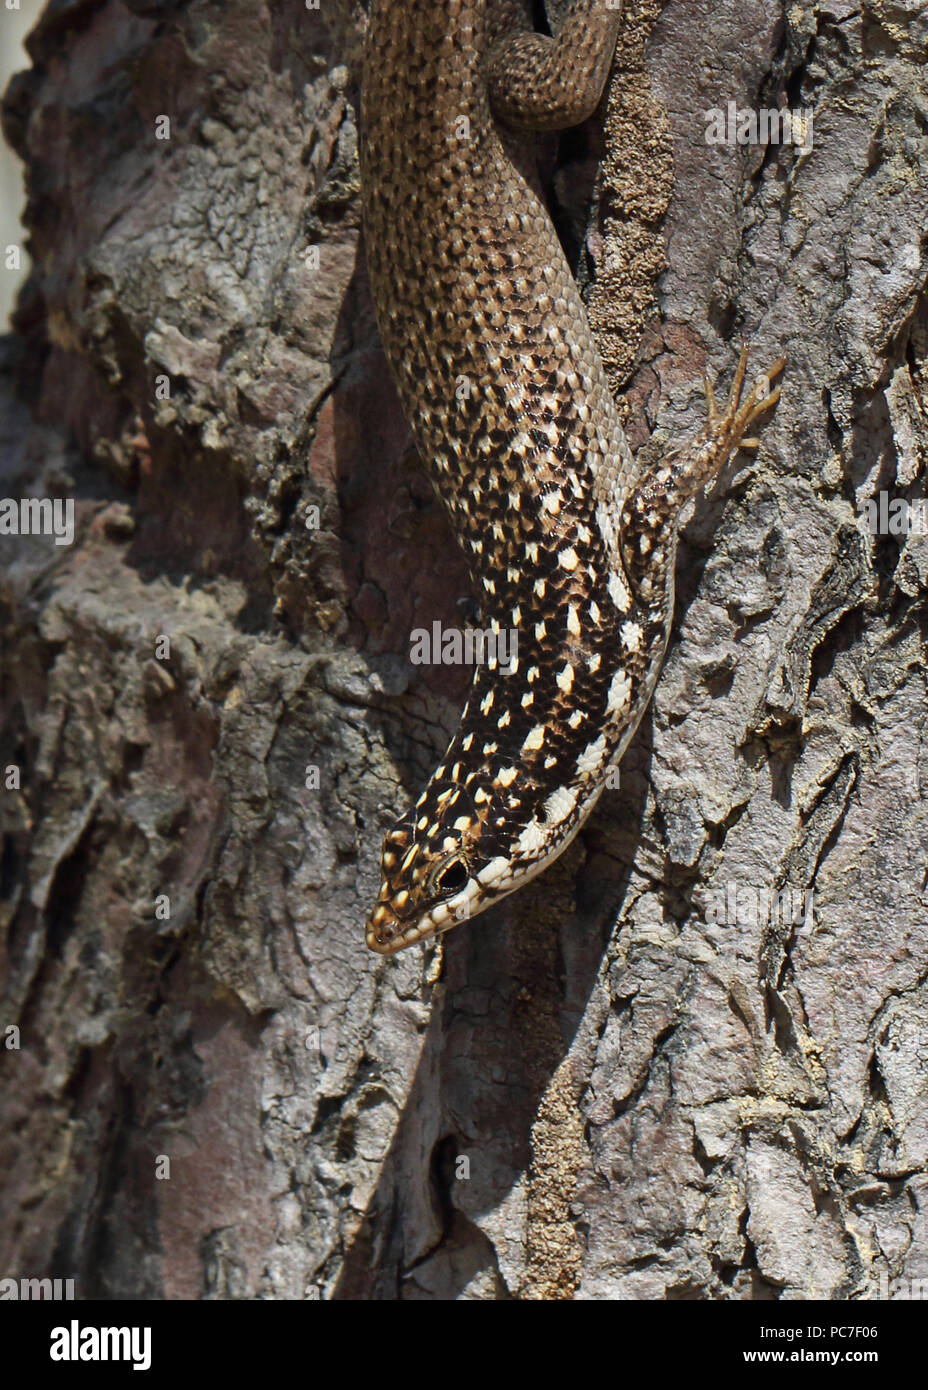 Trachylepis aureopunctata (Skink specie) adulto aggrappandosi al tronco di albero, endemica malgascia Tulear, Madagascar Novembre Foto Stock